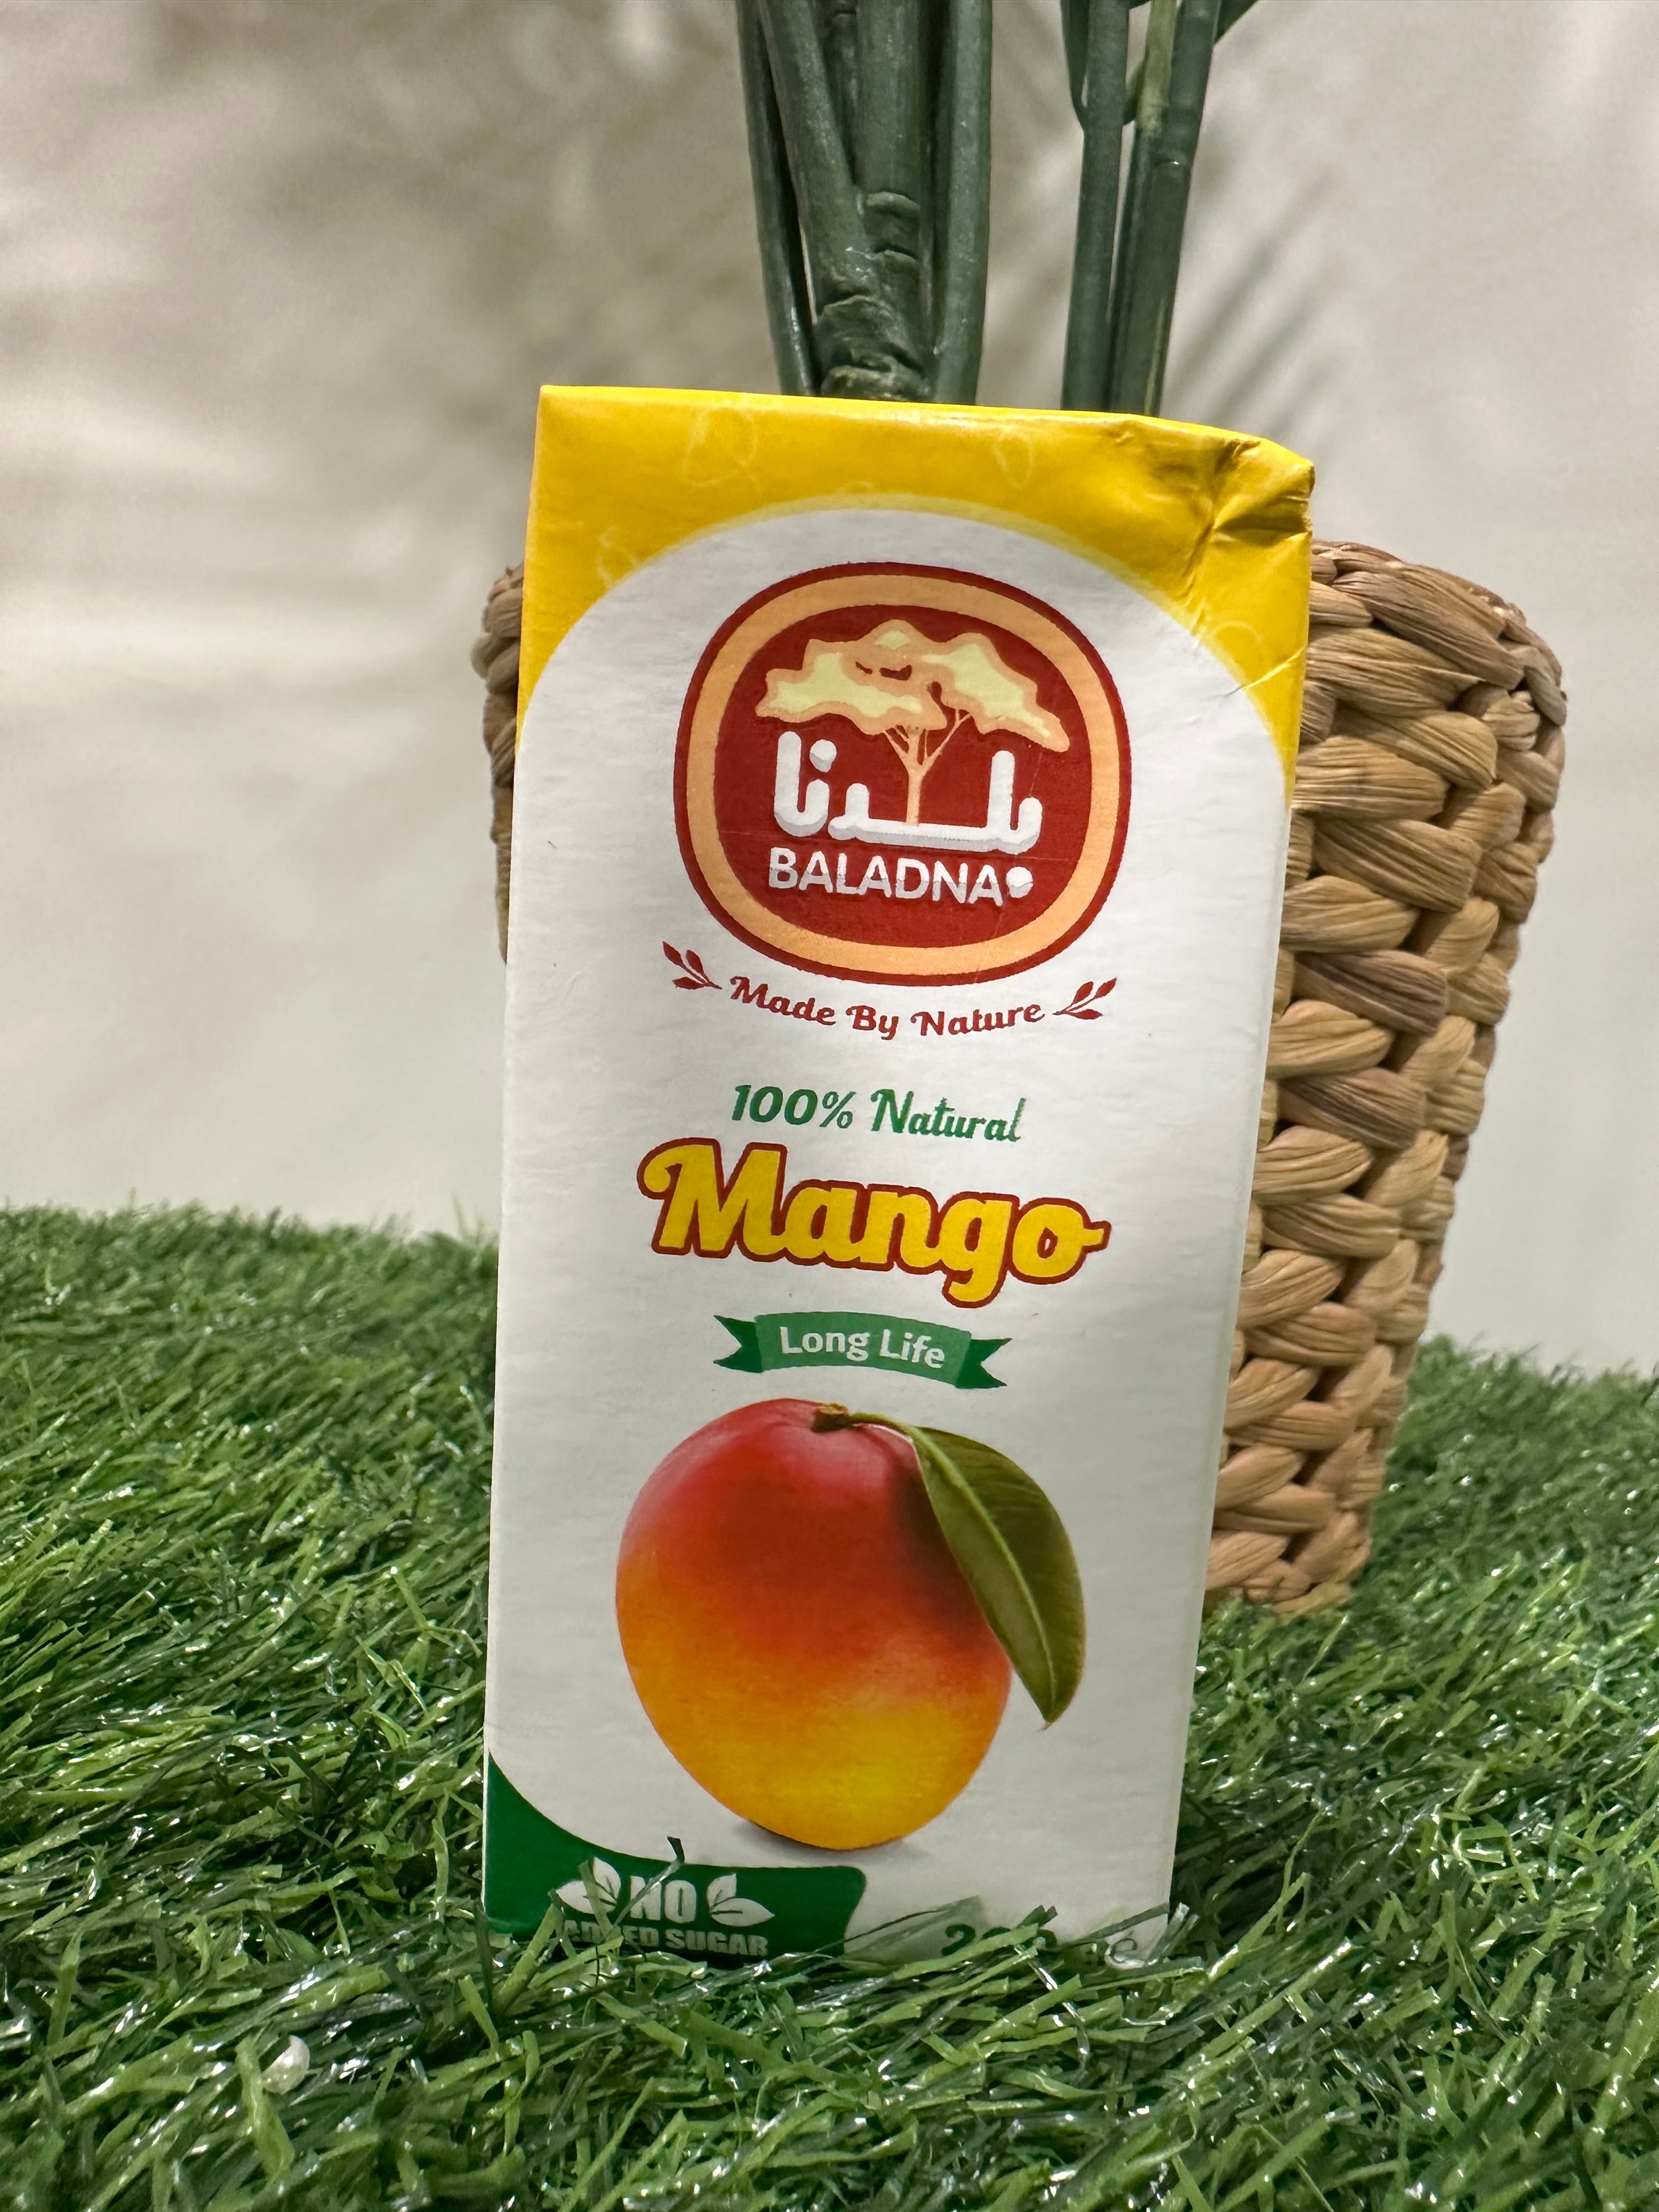 Baladna mango juice